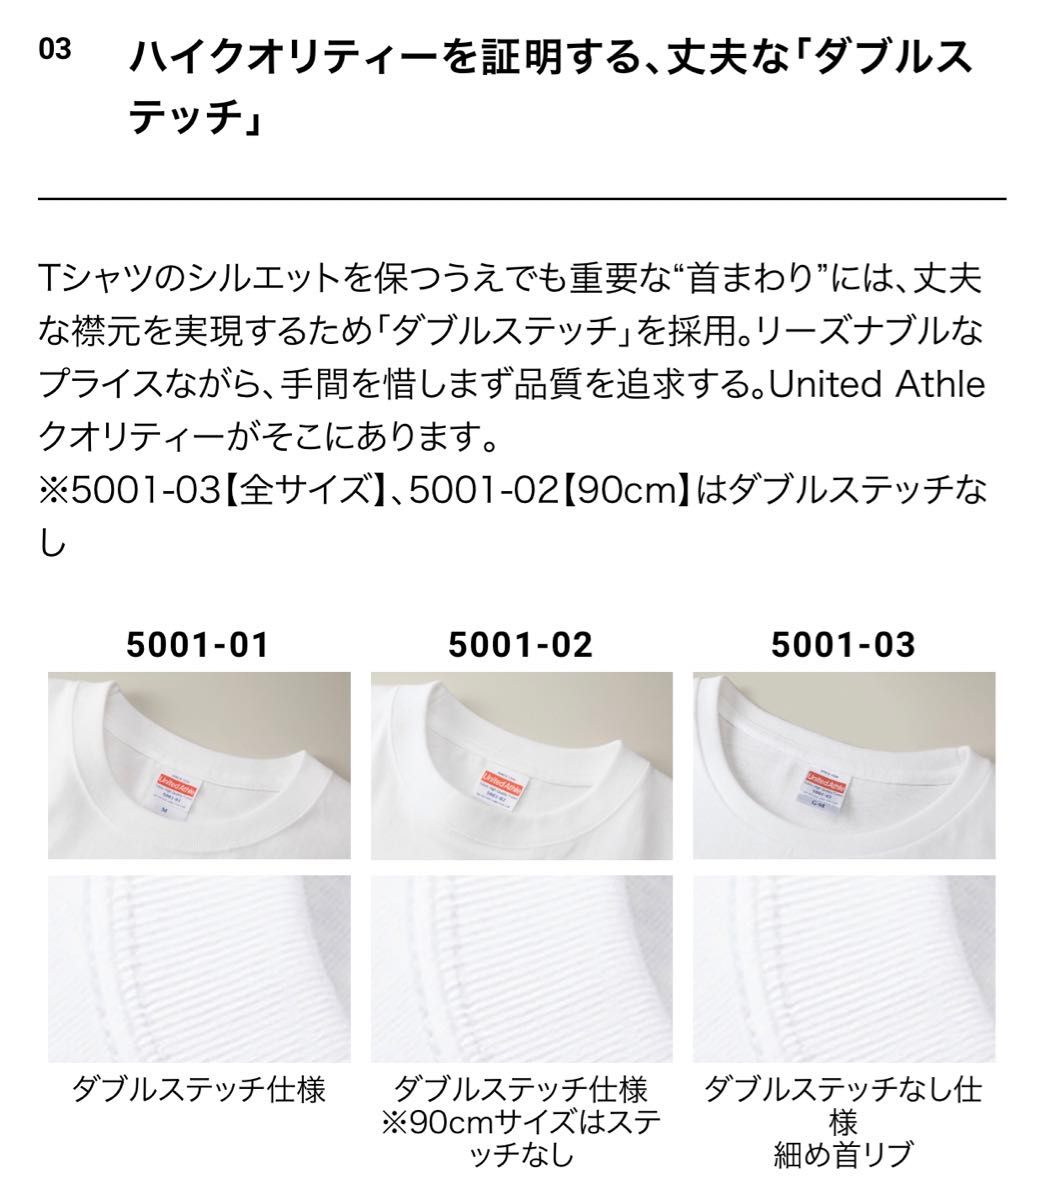 Tシャツ  半袖 5.6オンス ハイクオリティー【5001-01】M ダークチョコレート 2枚セット 圧縮発送